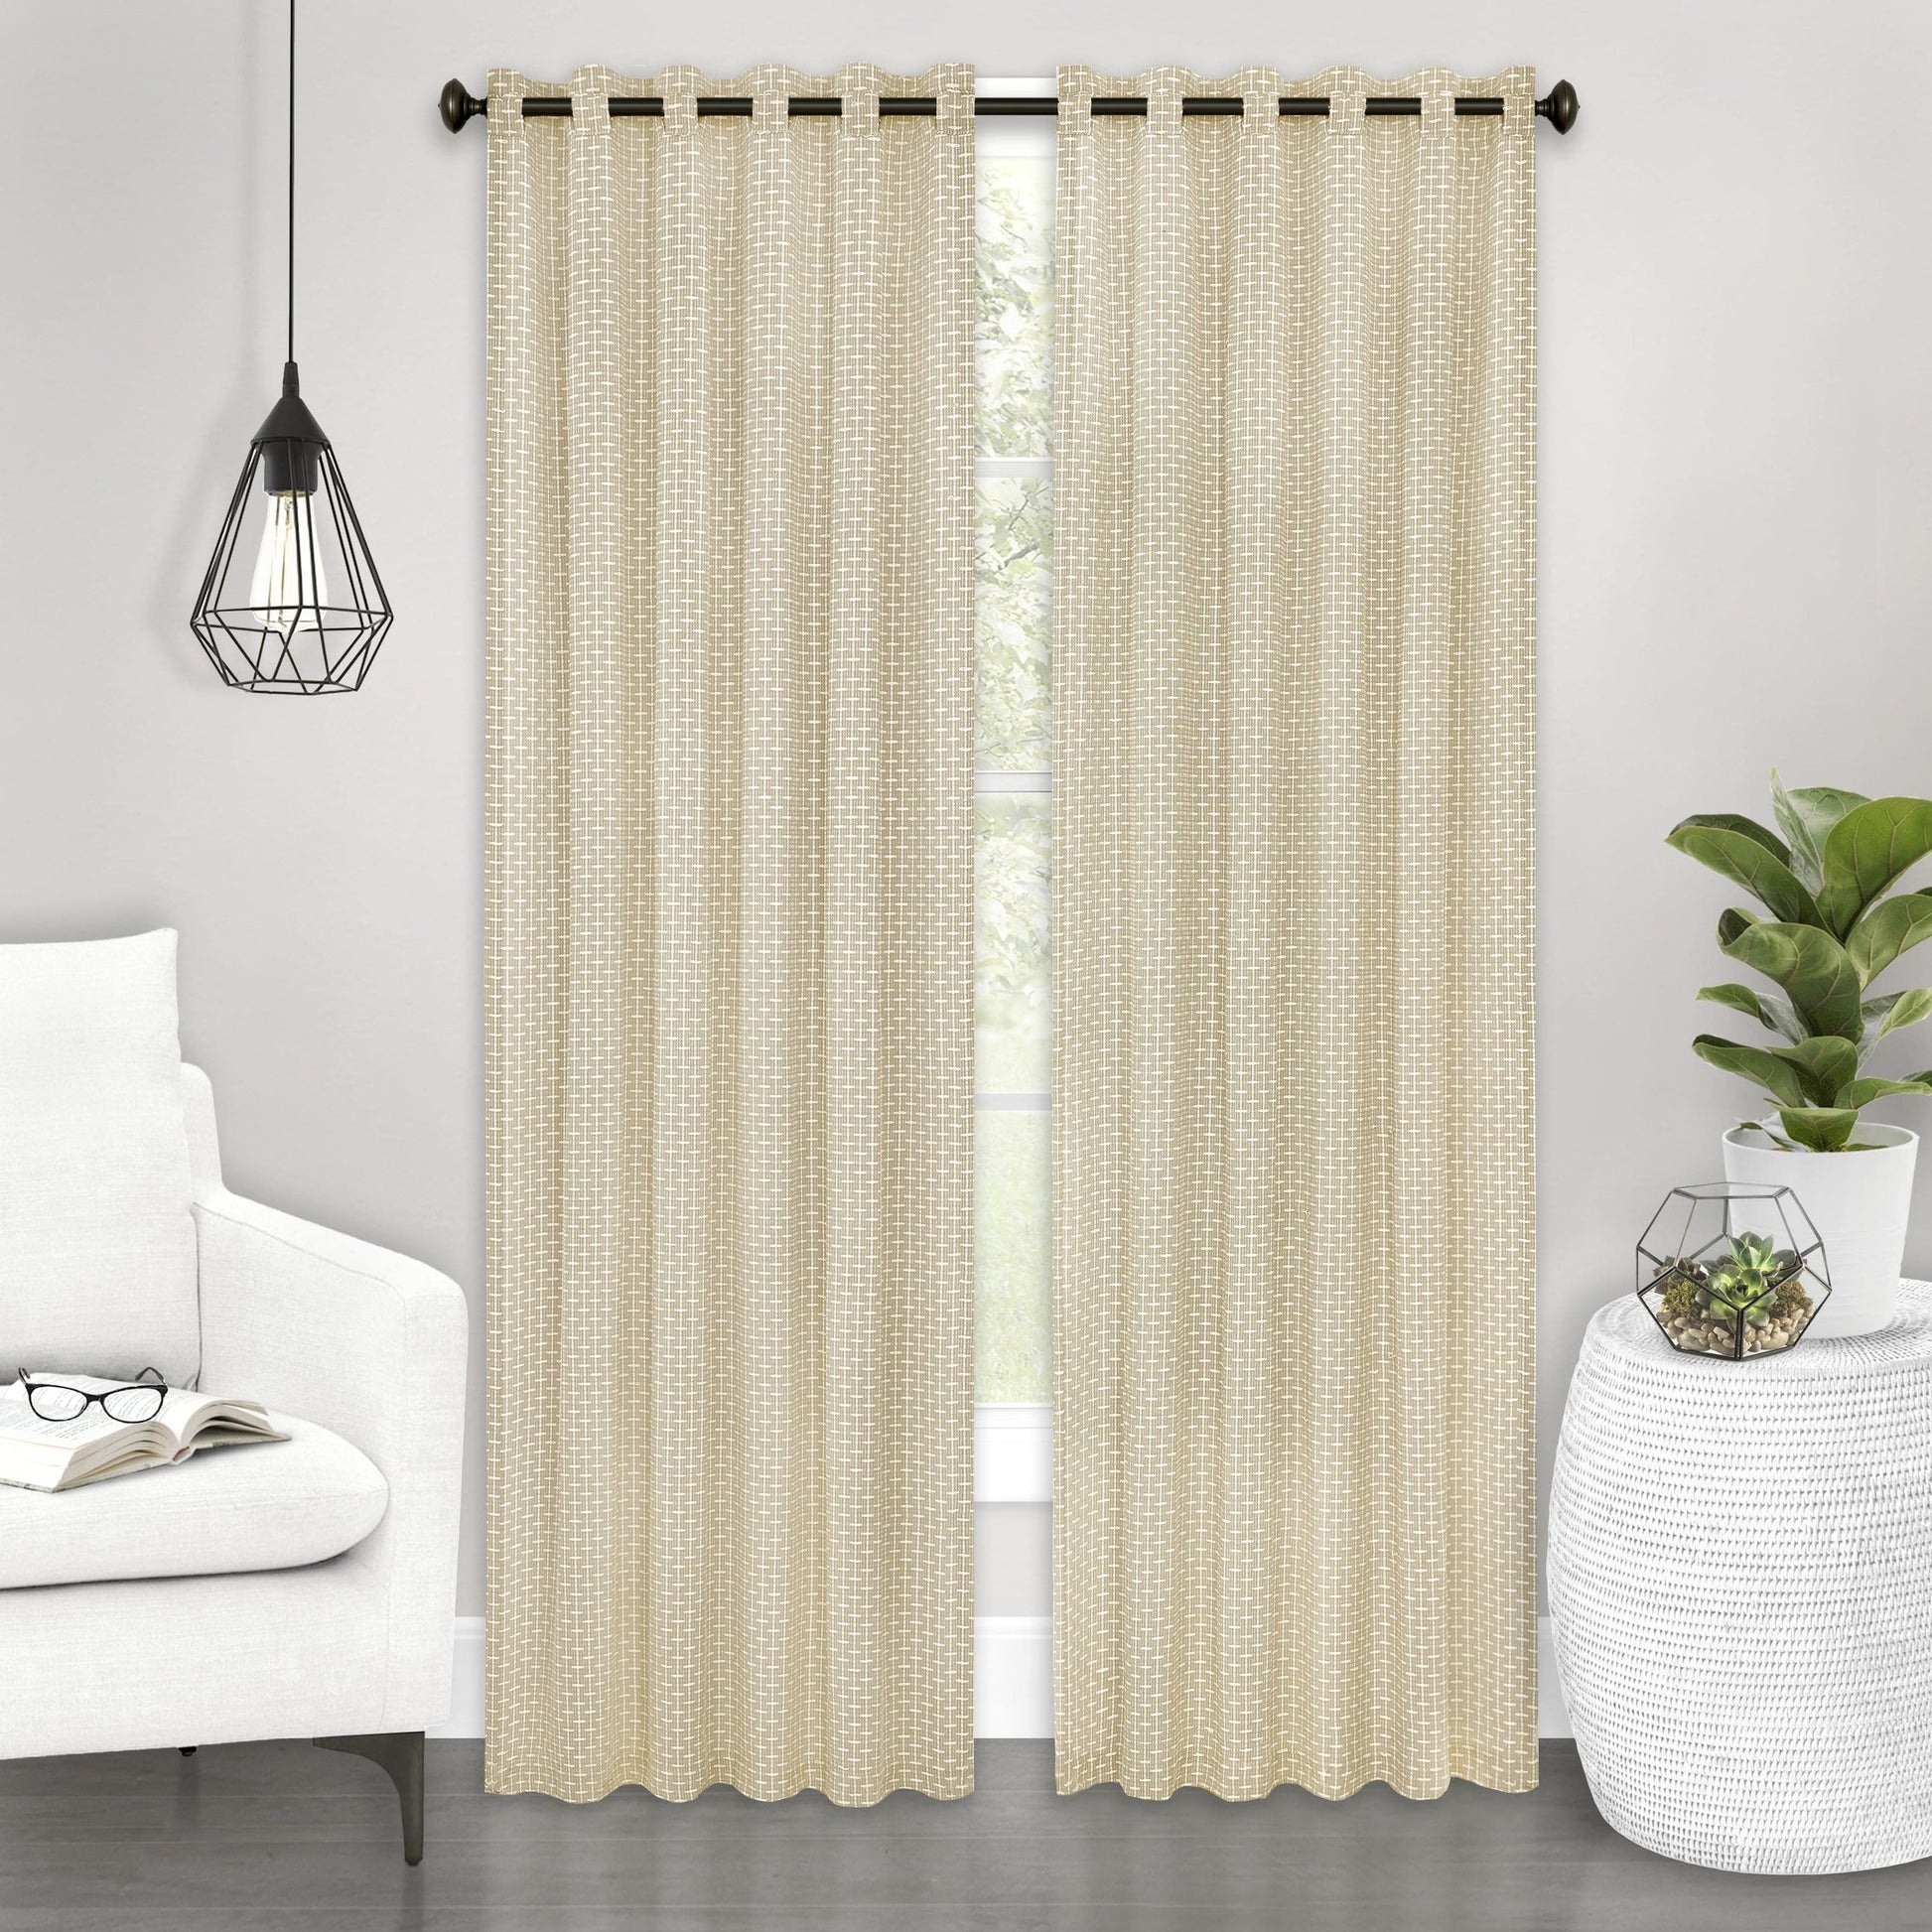  Window Curtain Panel - 42 Inch Width, 63 Inch Length, 2-inch Rod Pocket - Tan 